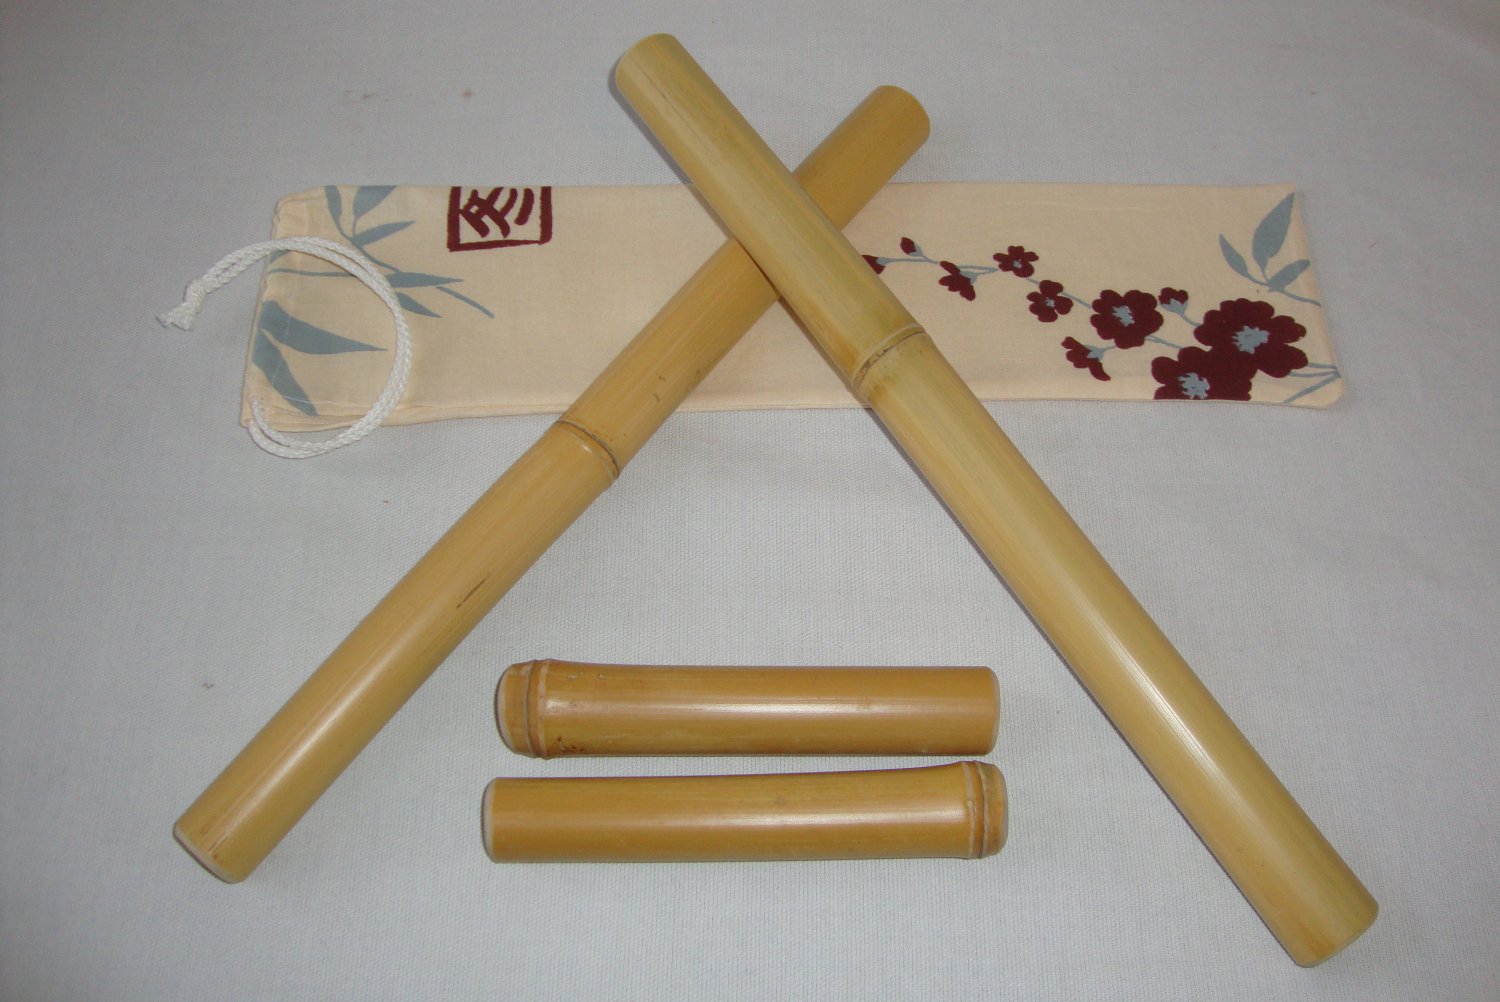 Массажный бамбуковый. Массаж бамбуковыми палочками. Бамбуковые массажные палочки. Массажные палочки из бамбука. Китайские палочки для массажа.